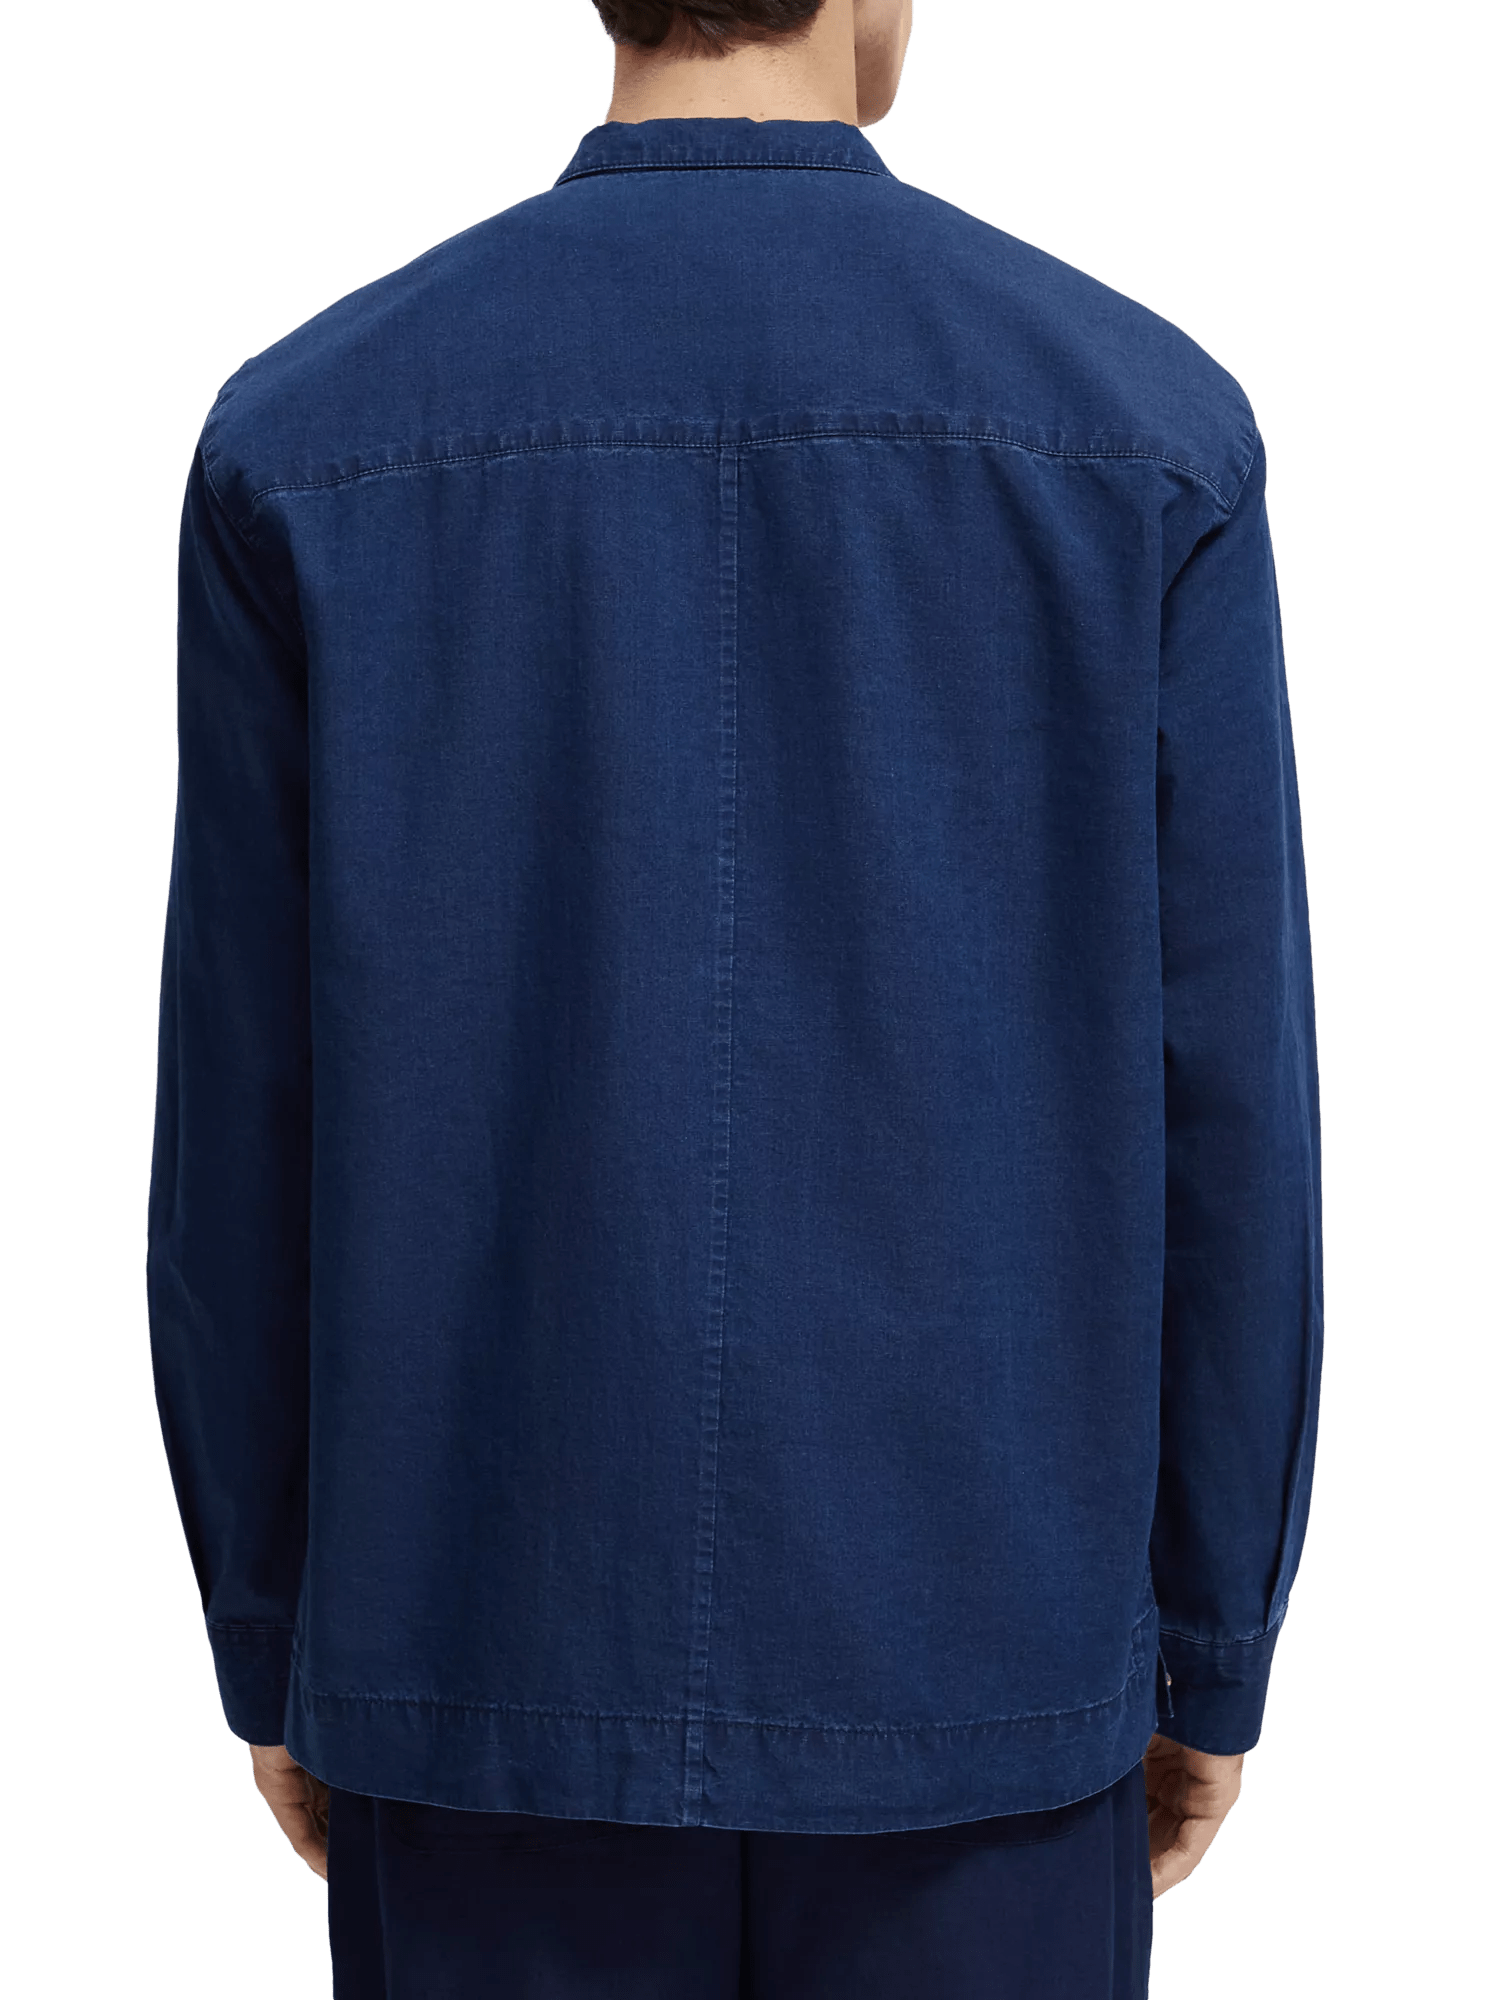 Scotch & Soda Indigo linen Japanese inspired shirt jacket NHD-BCK